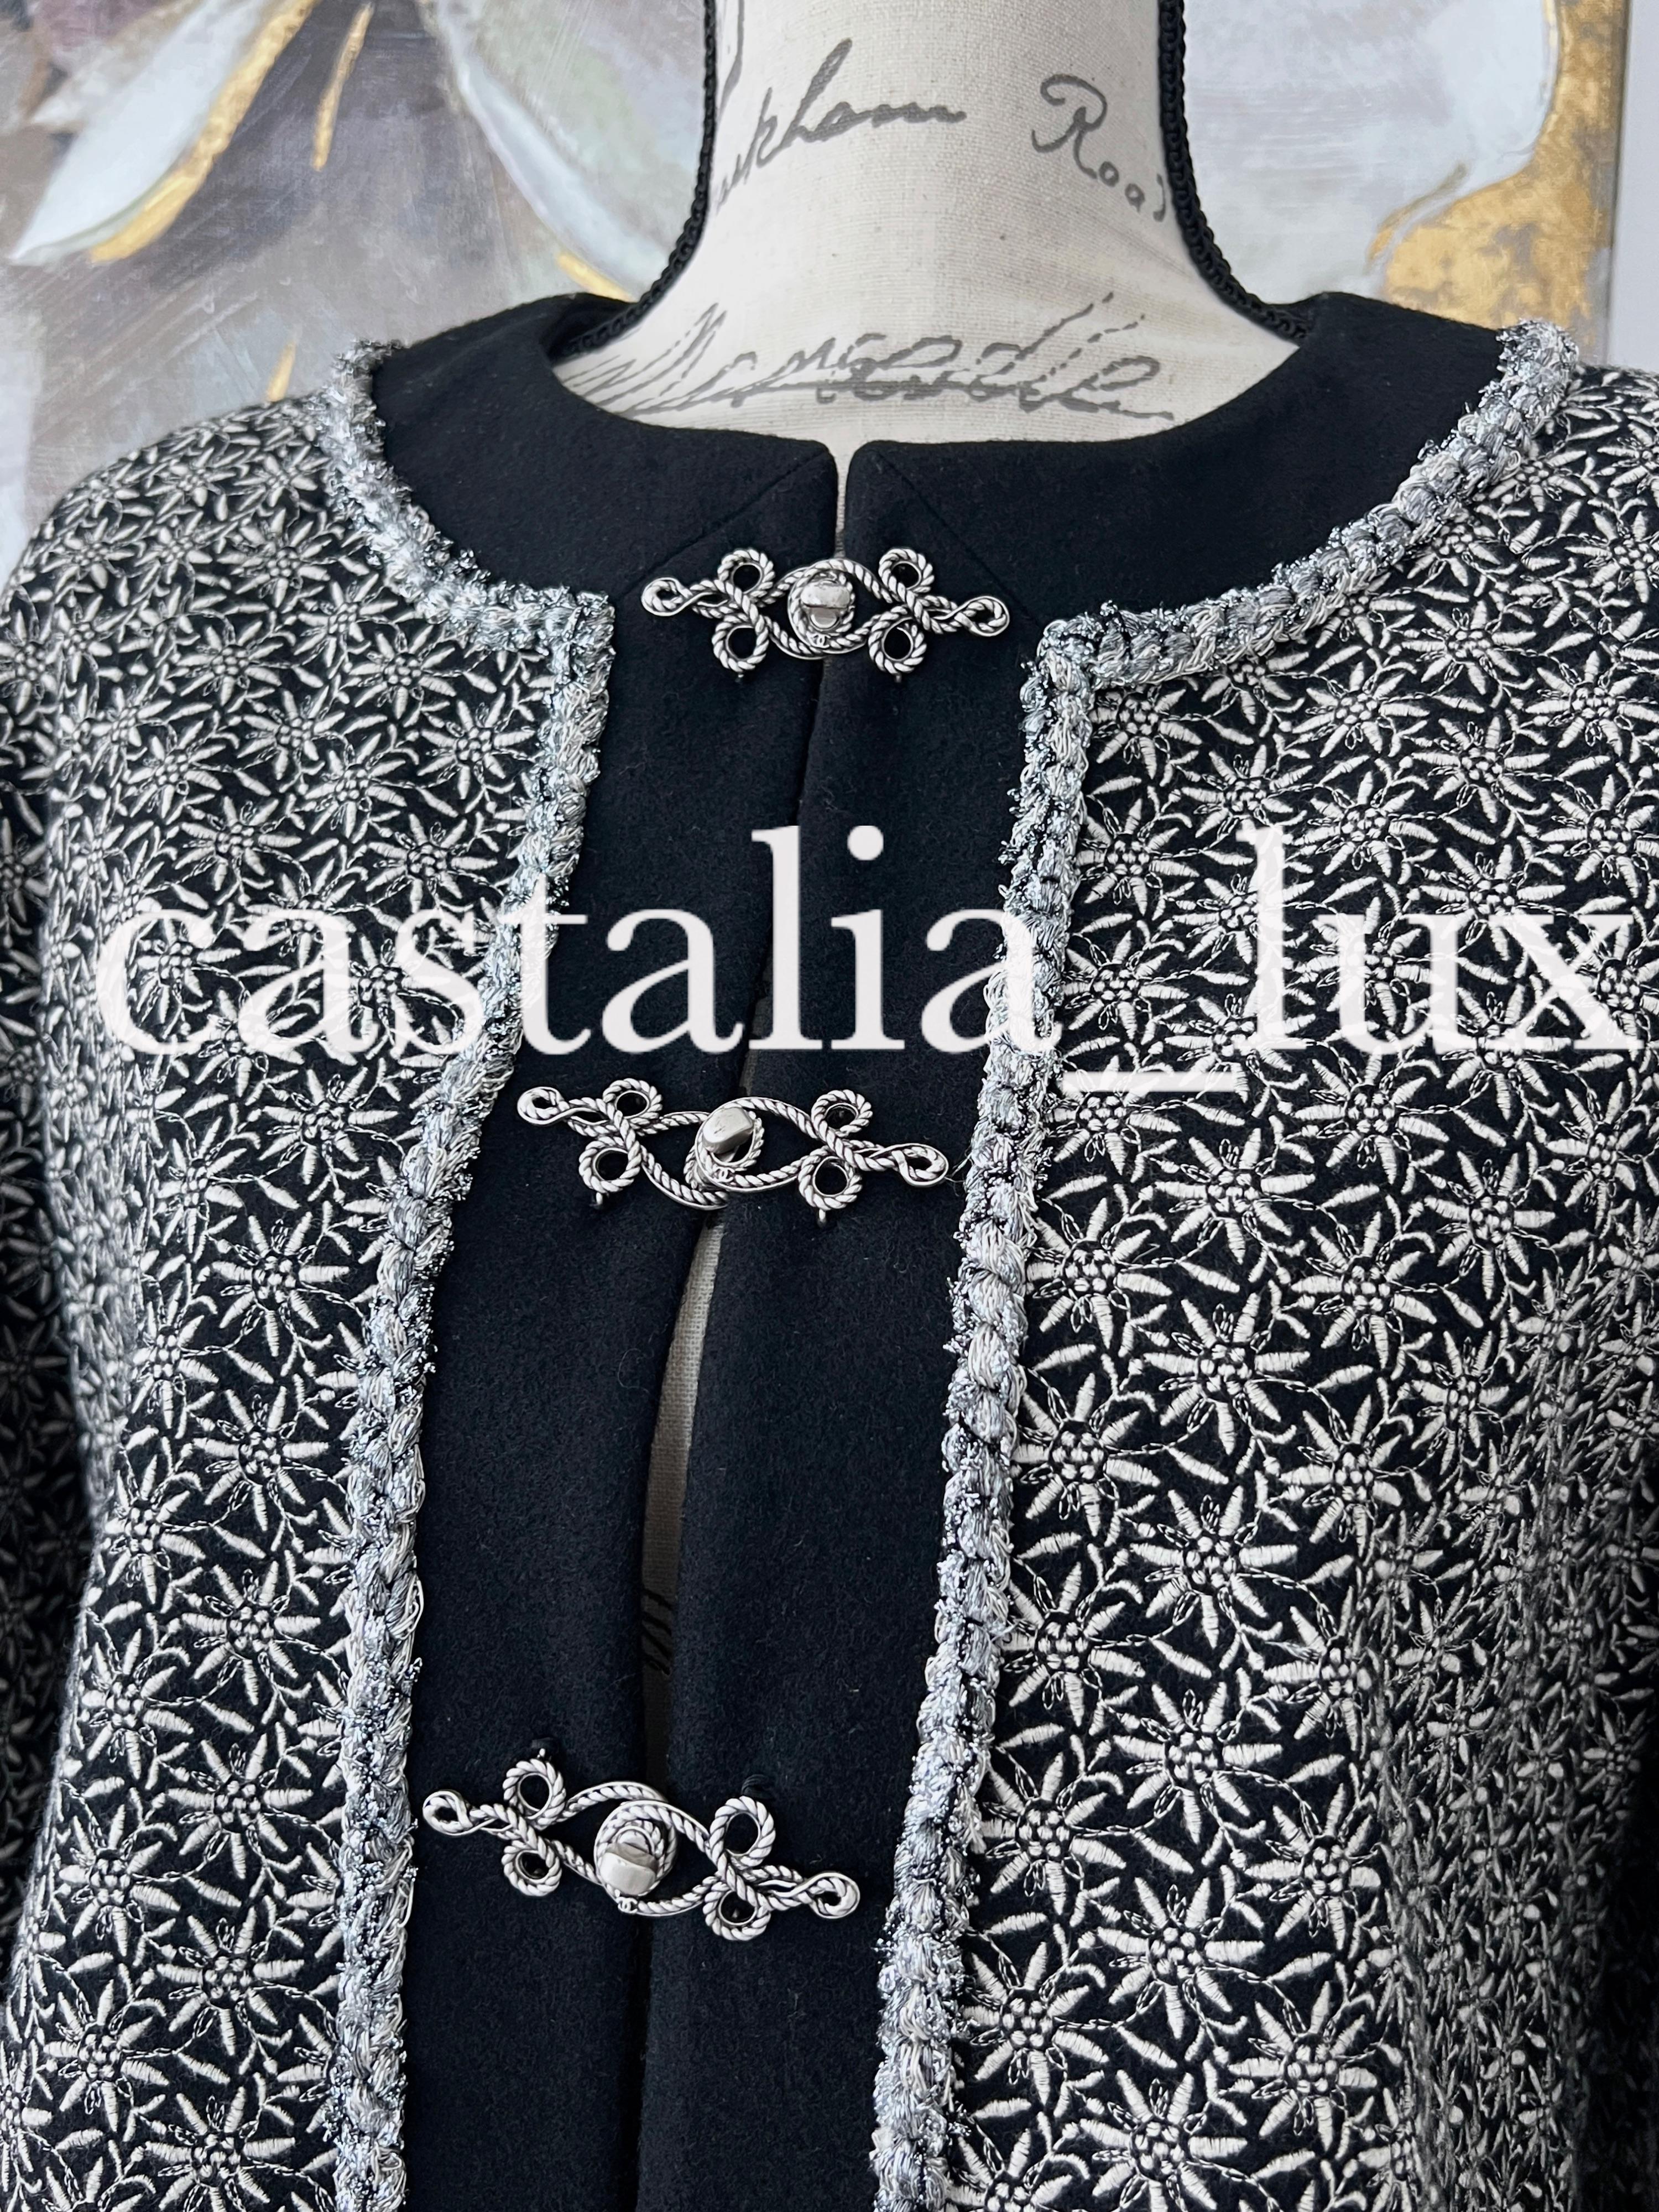 Chanel Paris / Salzburg Ad Campaign Edelweiss Jacket For Sale 6